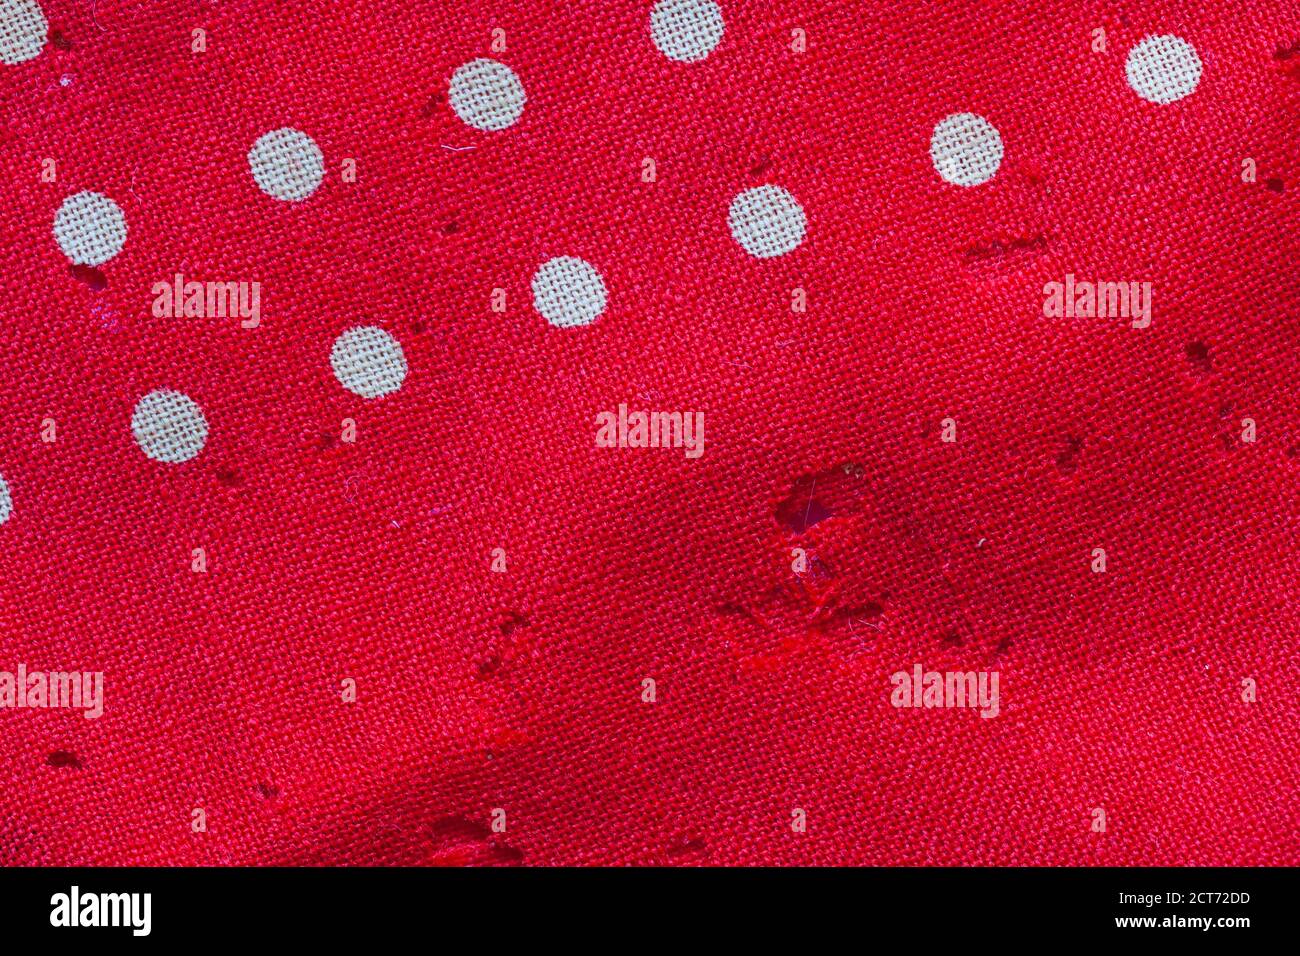 Tela con agujeros fotografías e imágenes de alta resolución - Alamy